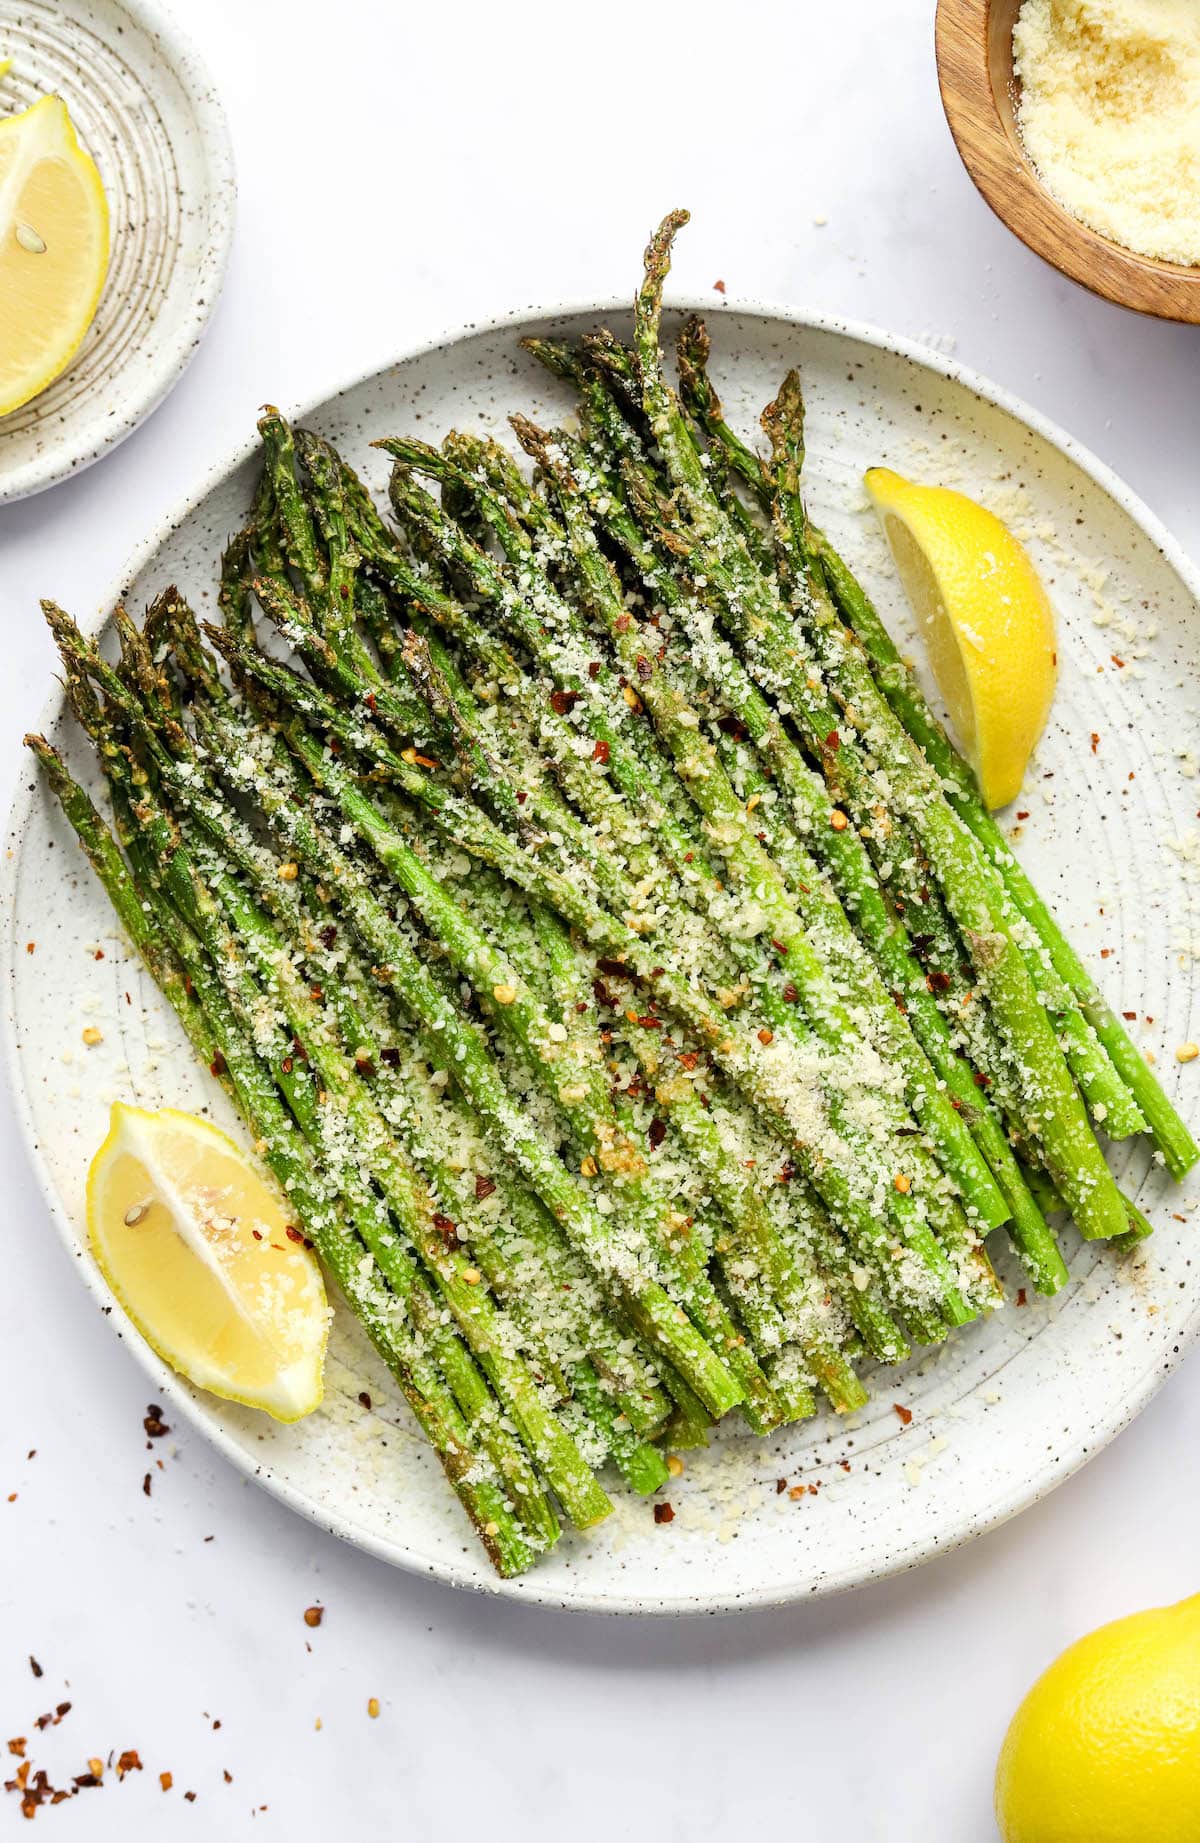 How to make air fryer asparagus: